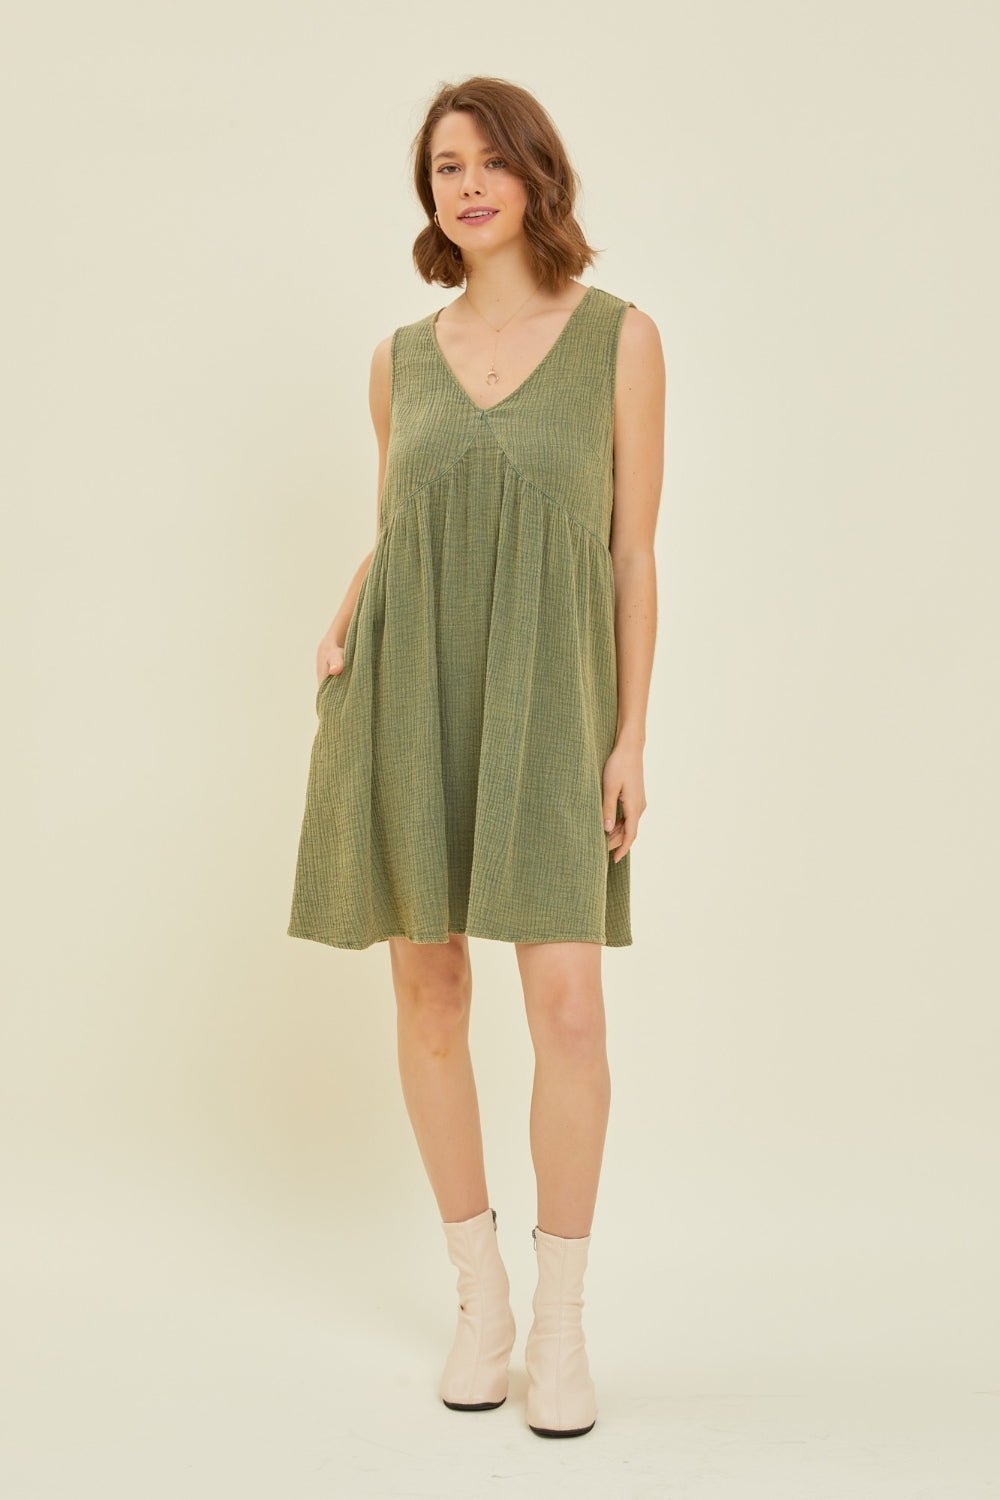 Textured V-Neck Sleeveless Flare Mini Dress in GreenMini DressHEYSON